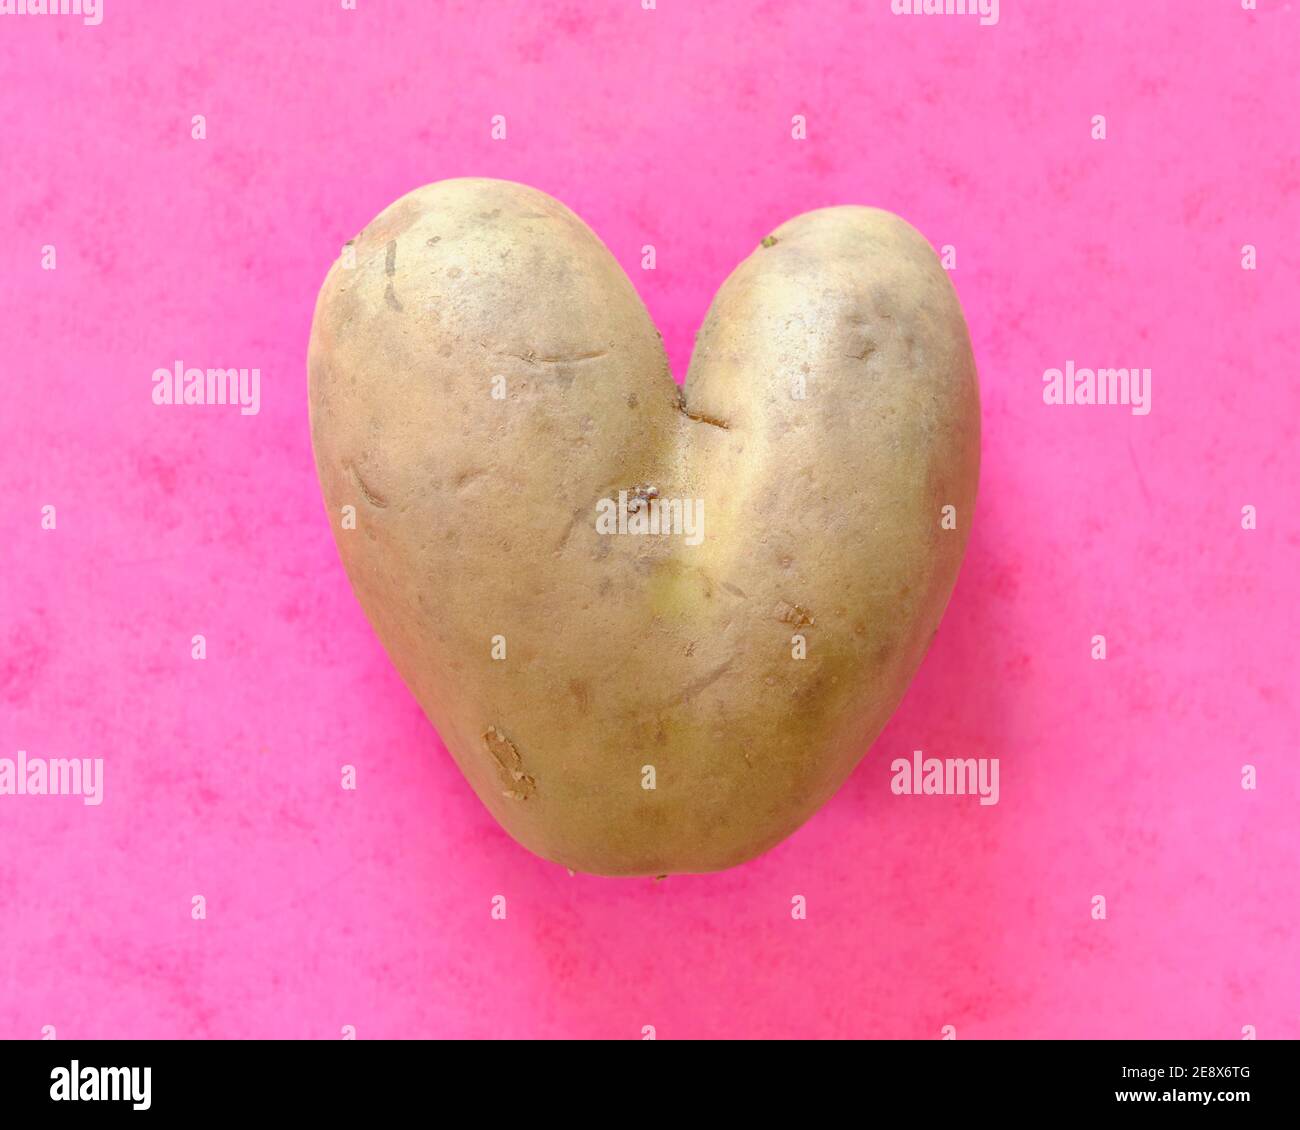 Heart shaped misshapen potato on pink Stock Photo